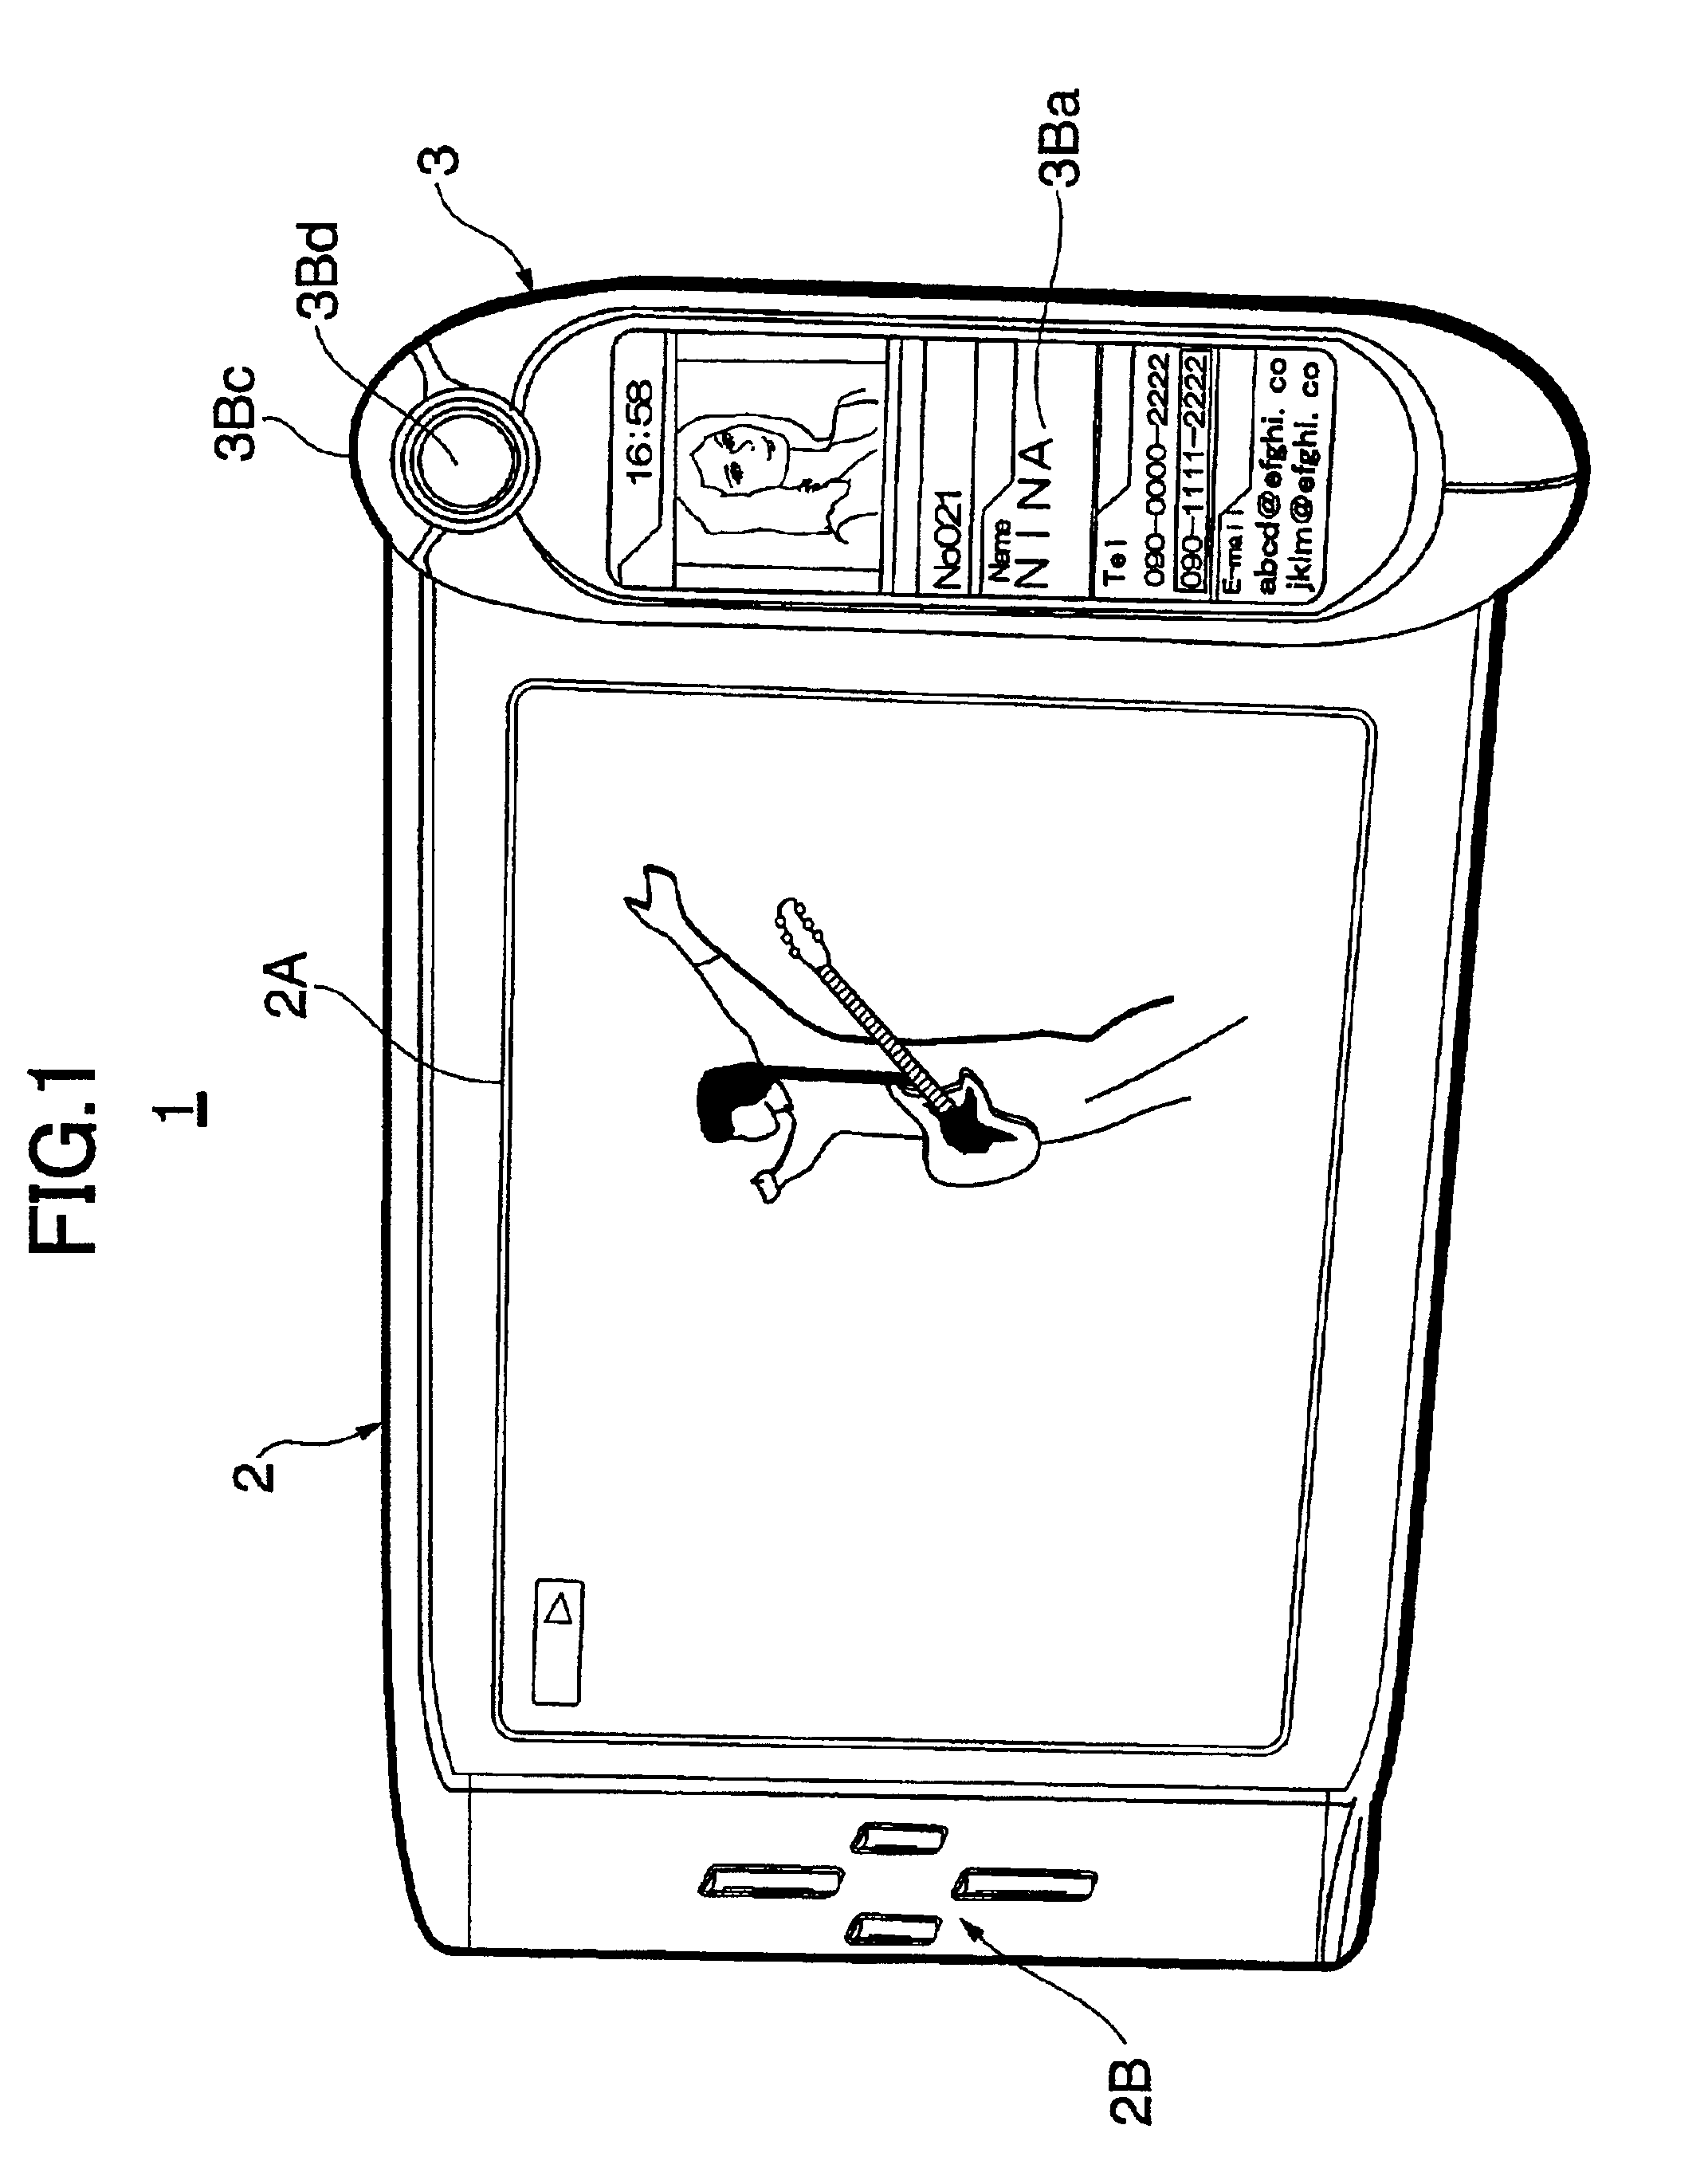 Portable information terminal